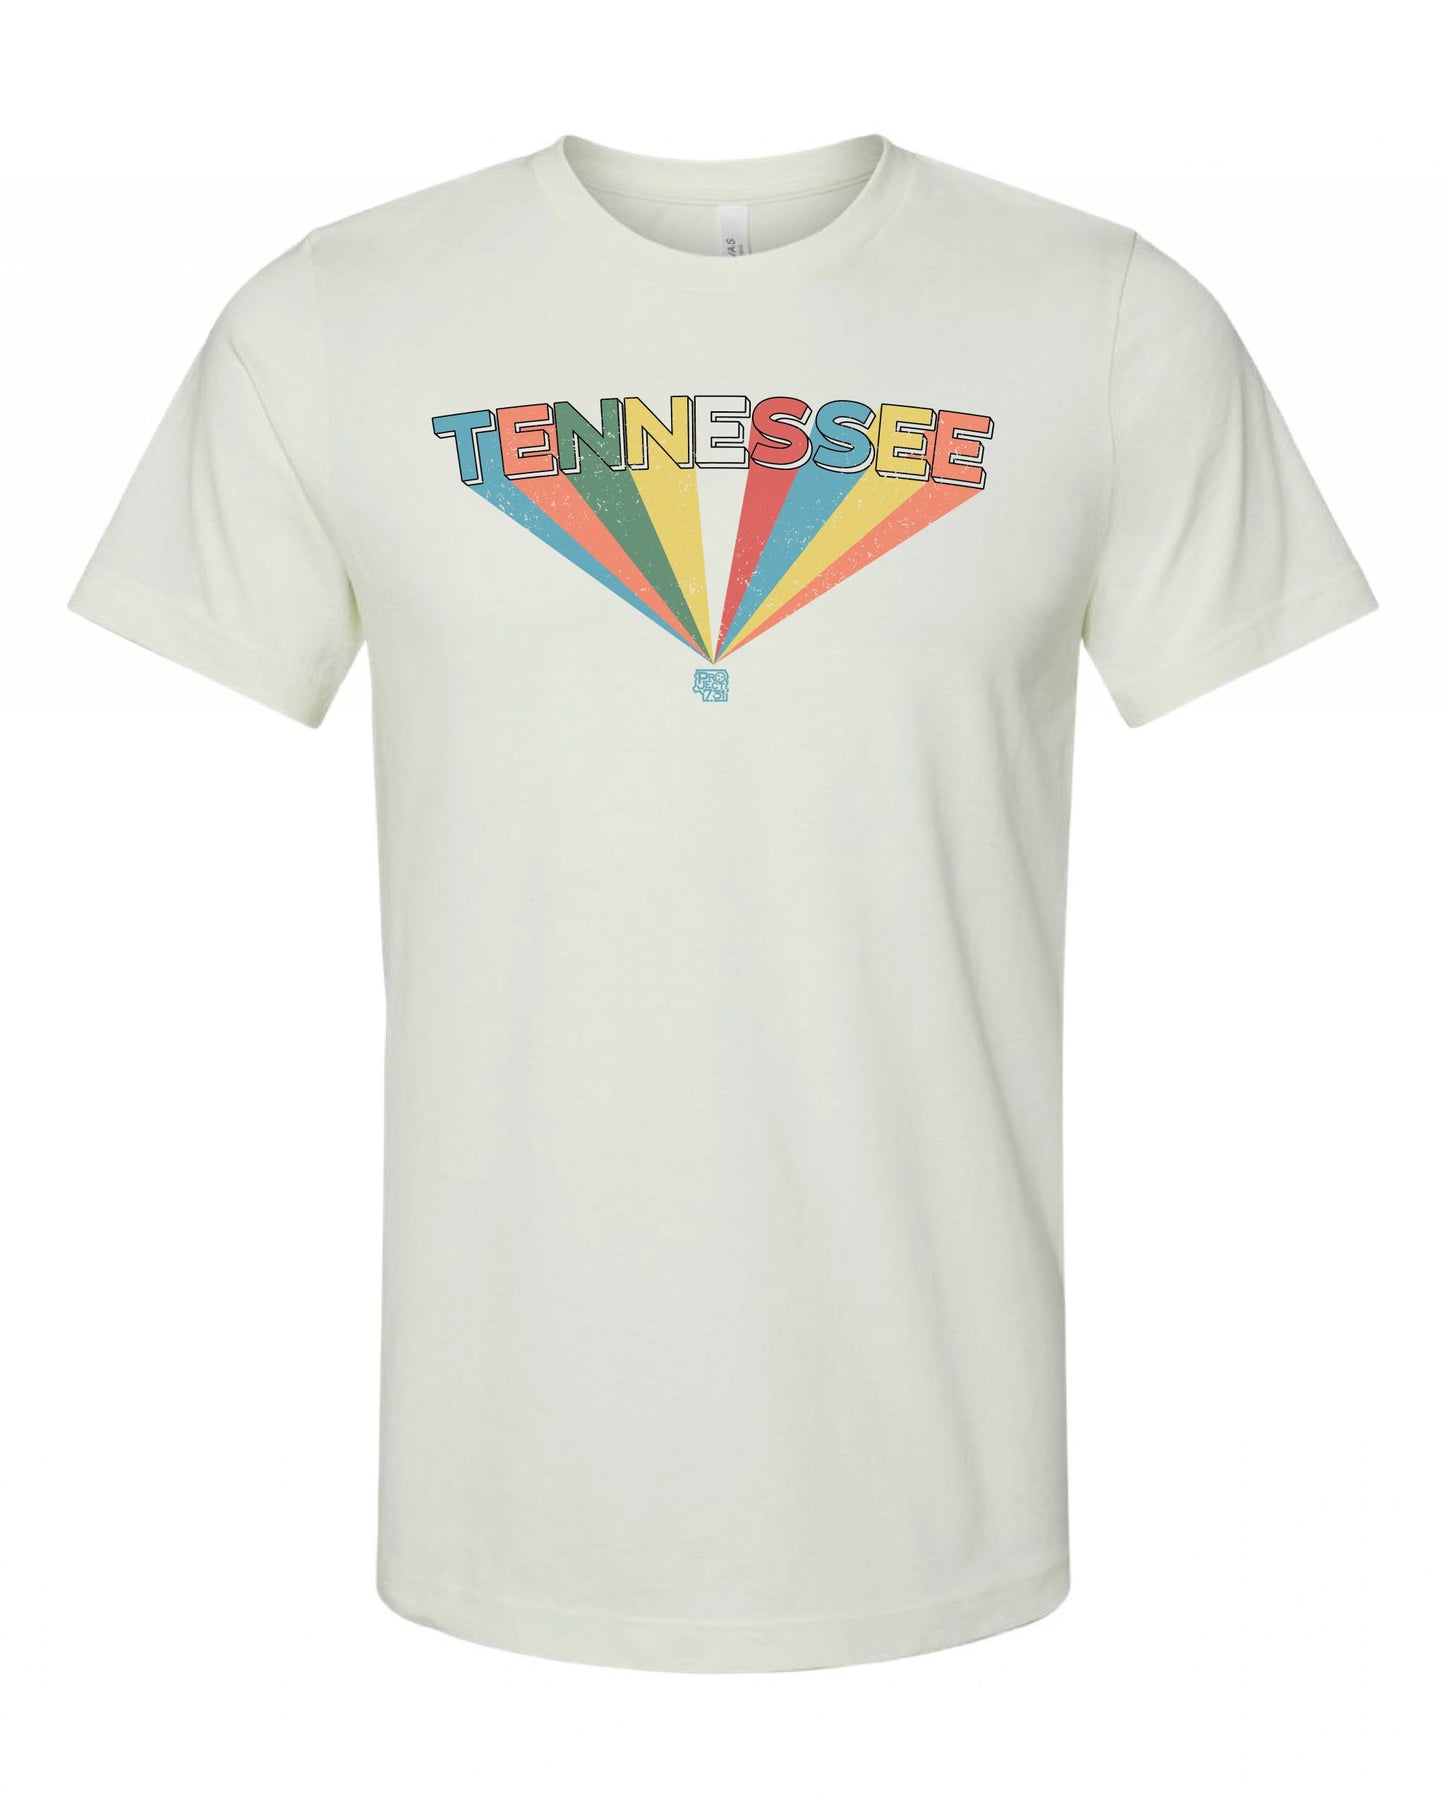 Tennessee Rainbow Burst Shirt